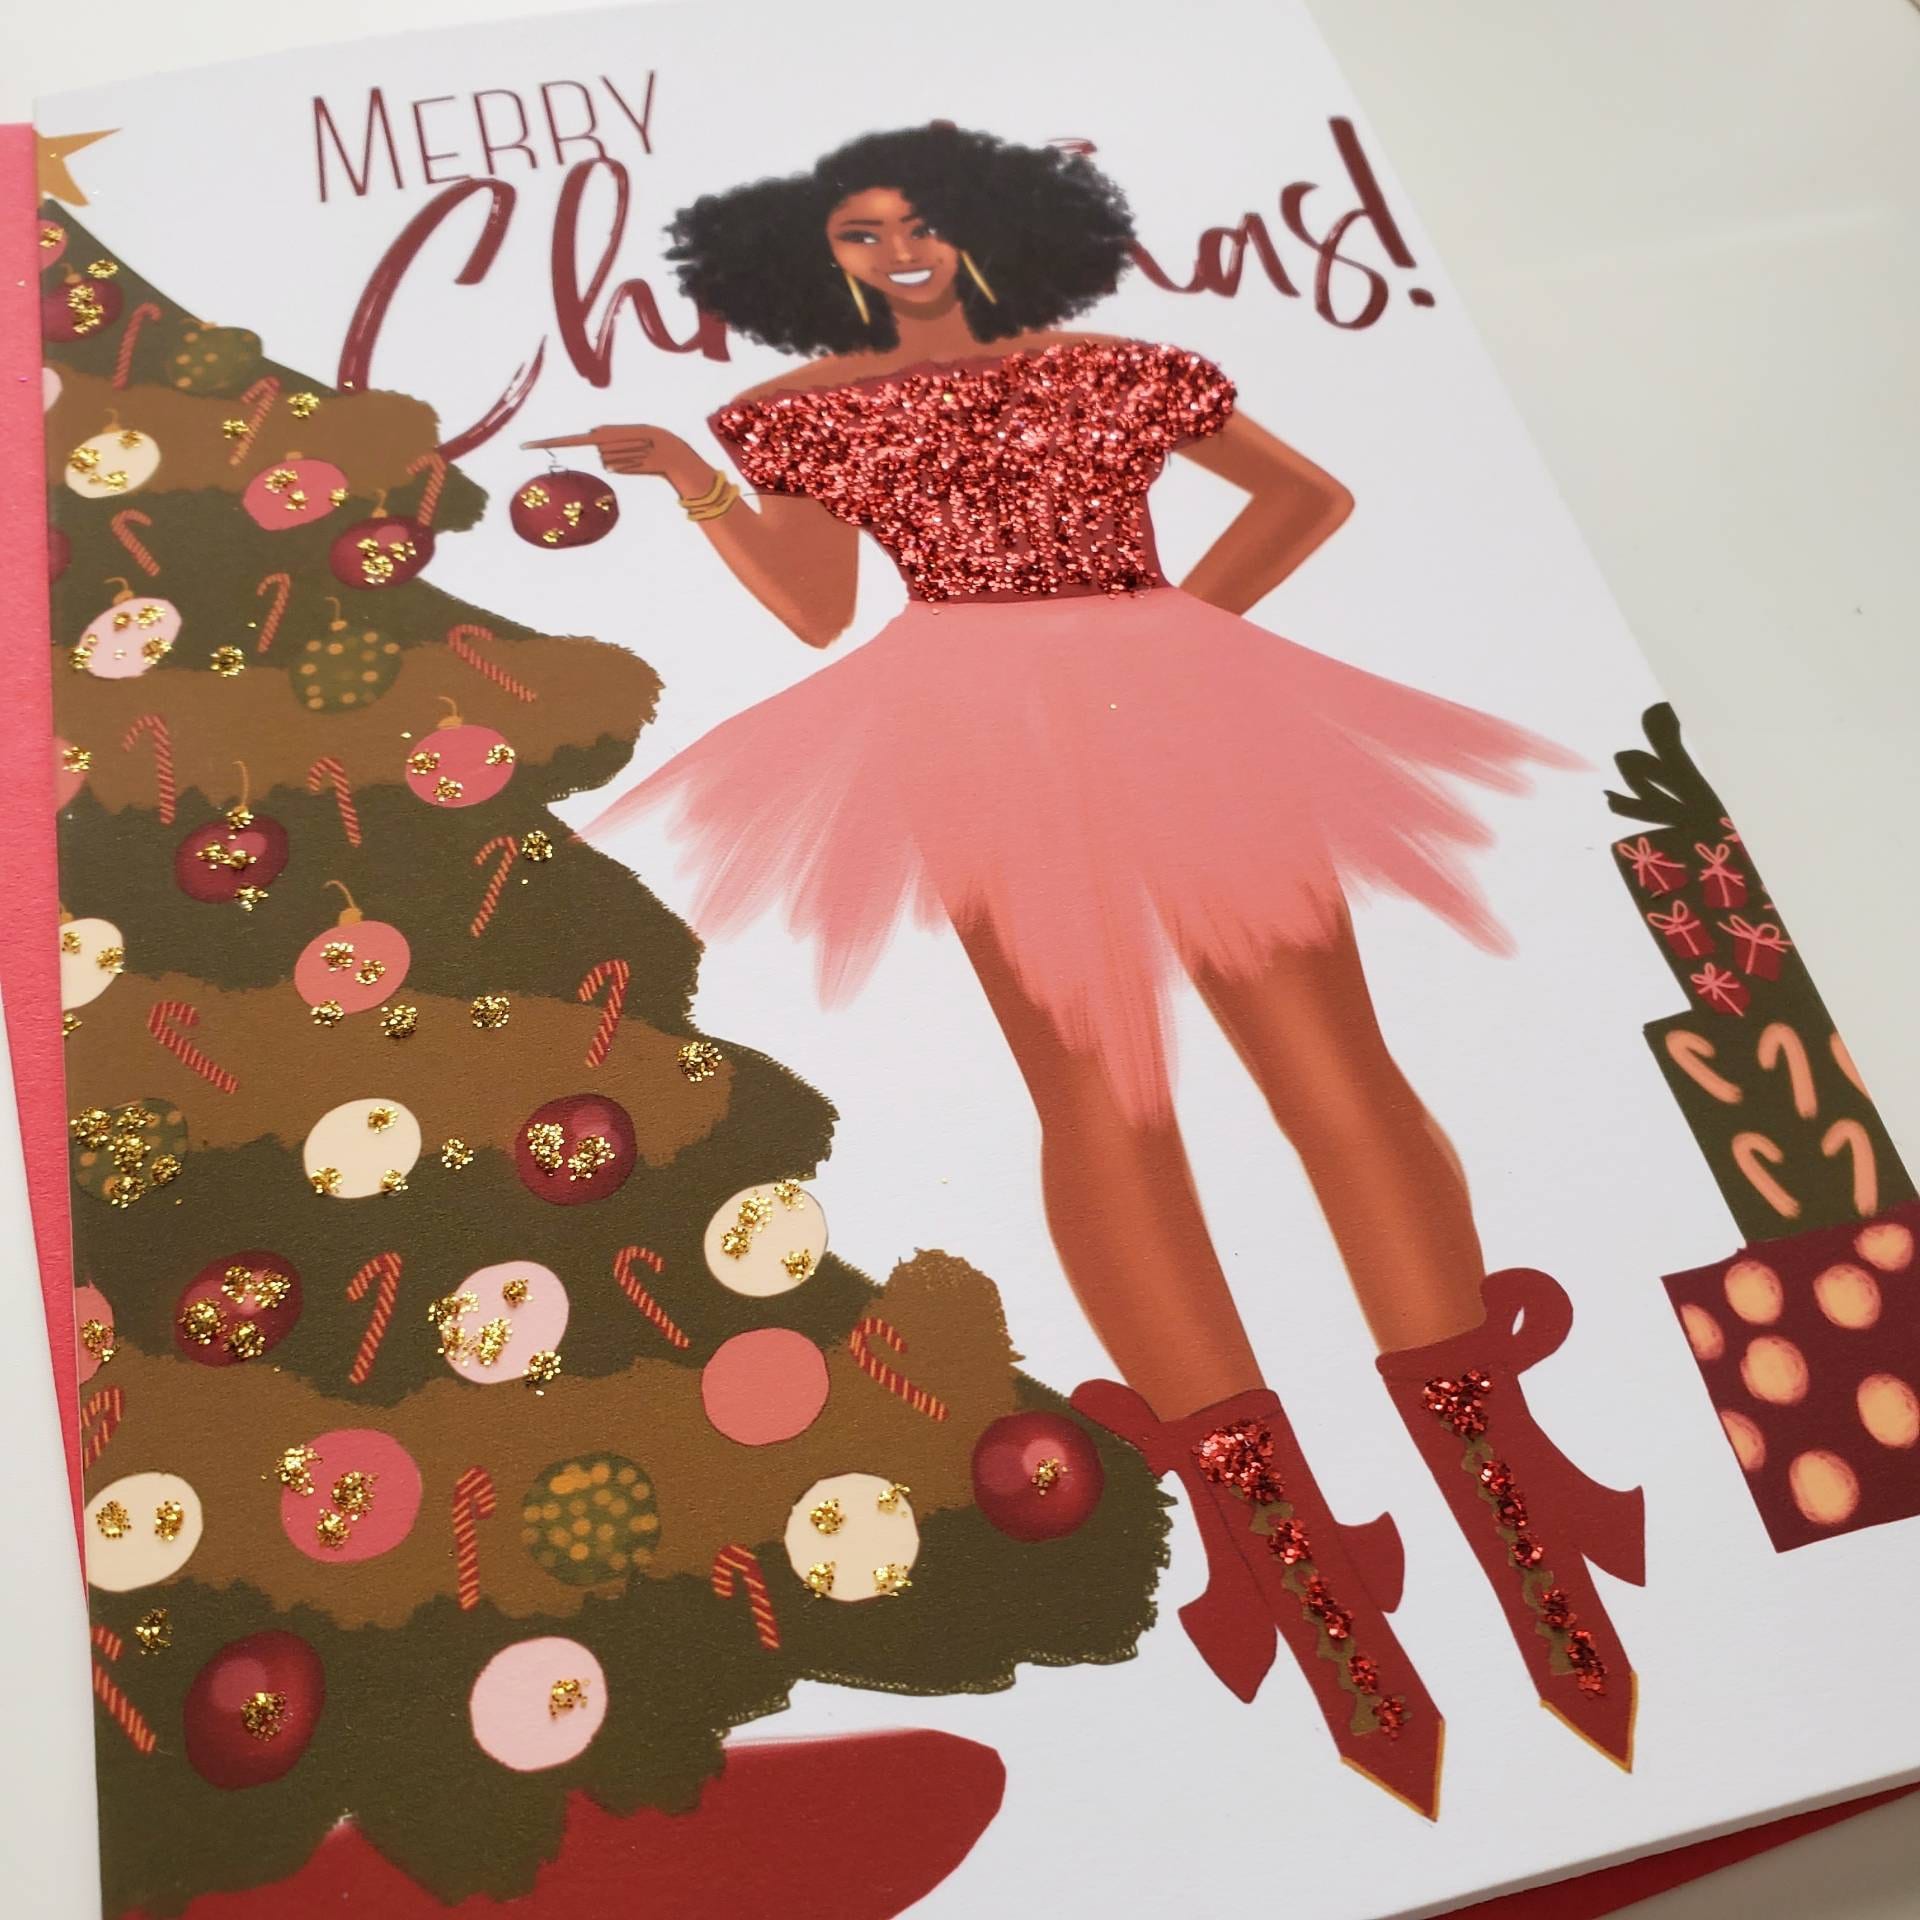 Merry Christmas Card - Black Girl | Black Christmas Cards | Black Holiday Cards | African American Greetings | Xmas | Melanin Cards